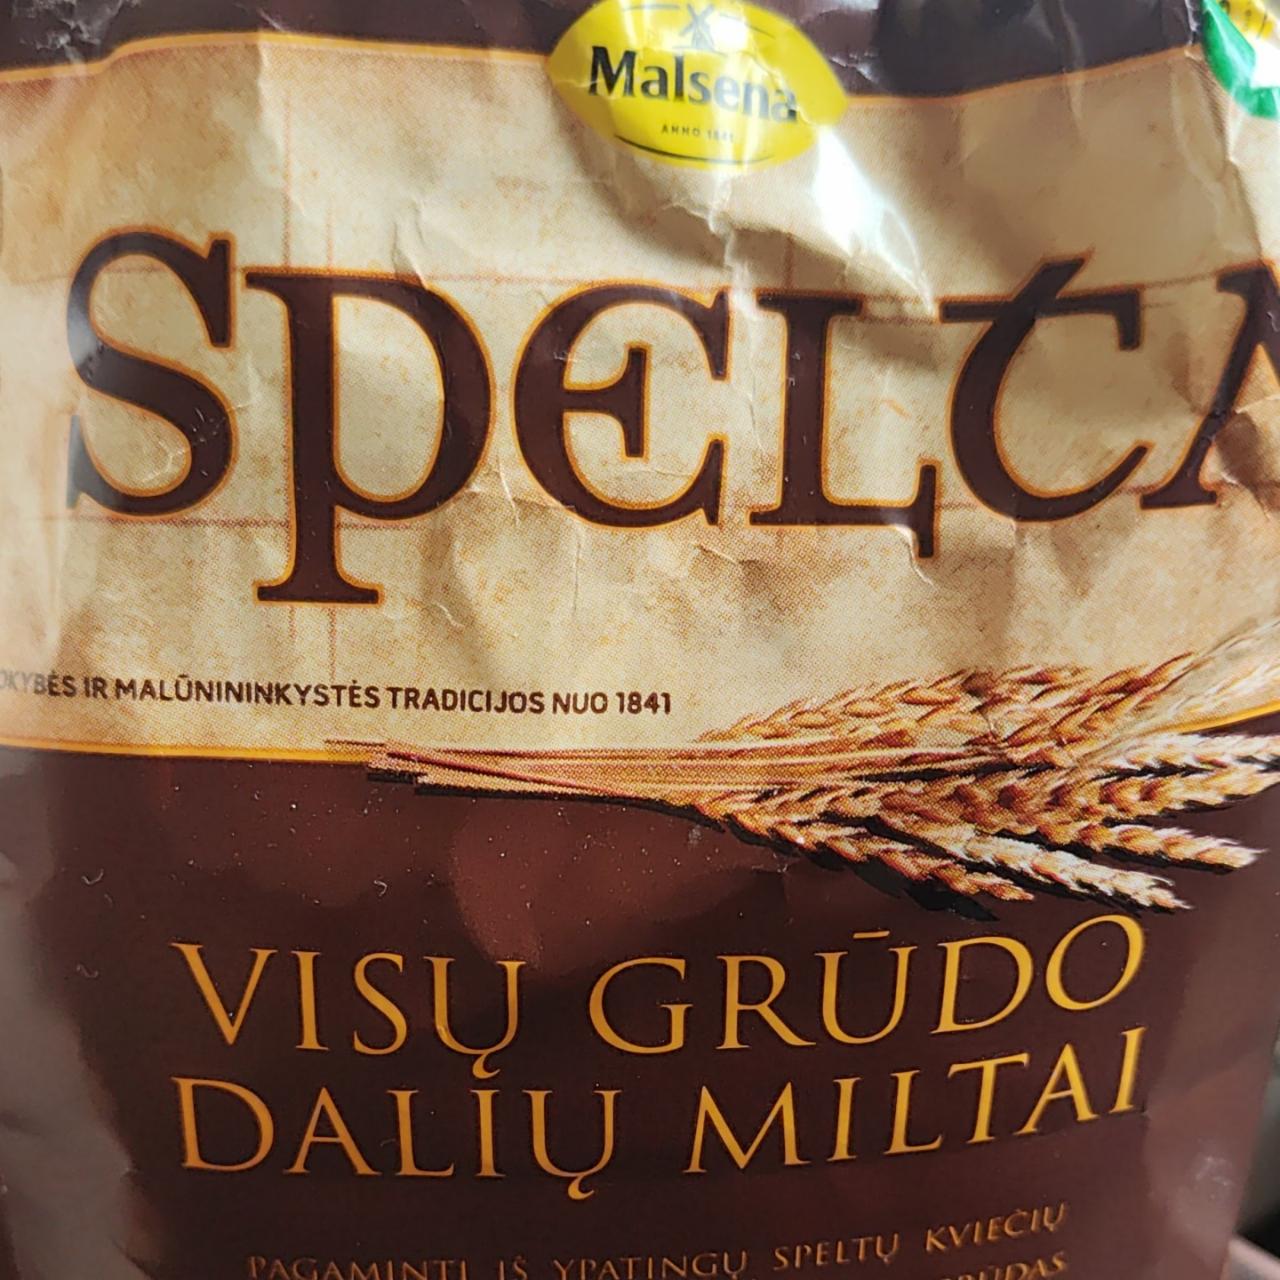 Фото - Борошно цільнозірнове пшеничне спельта Malsena